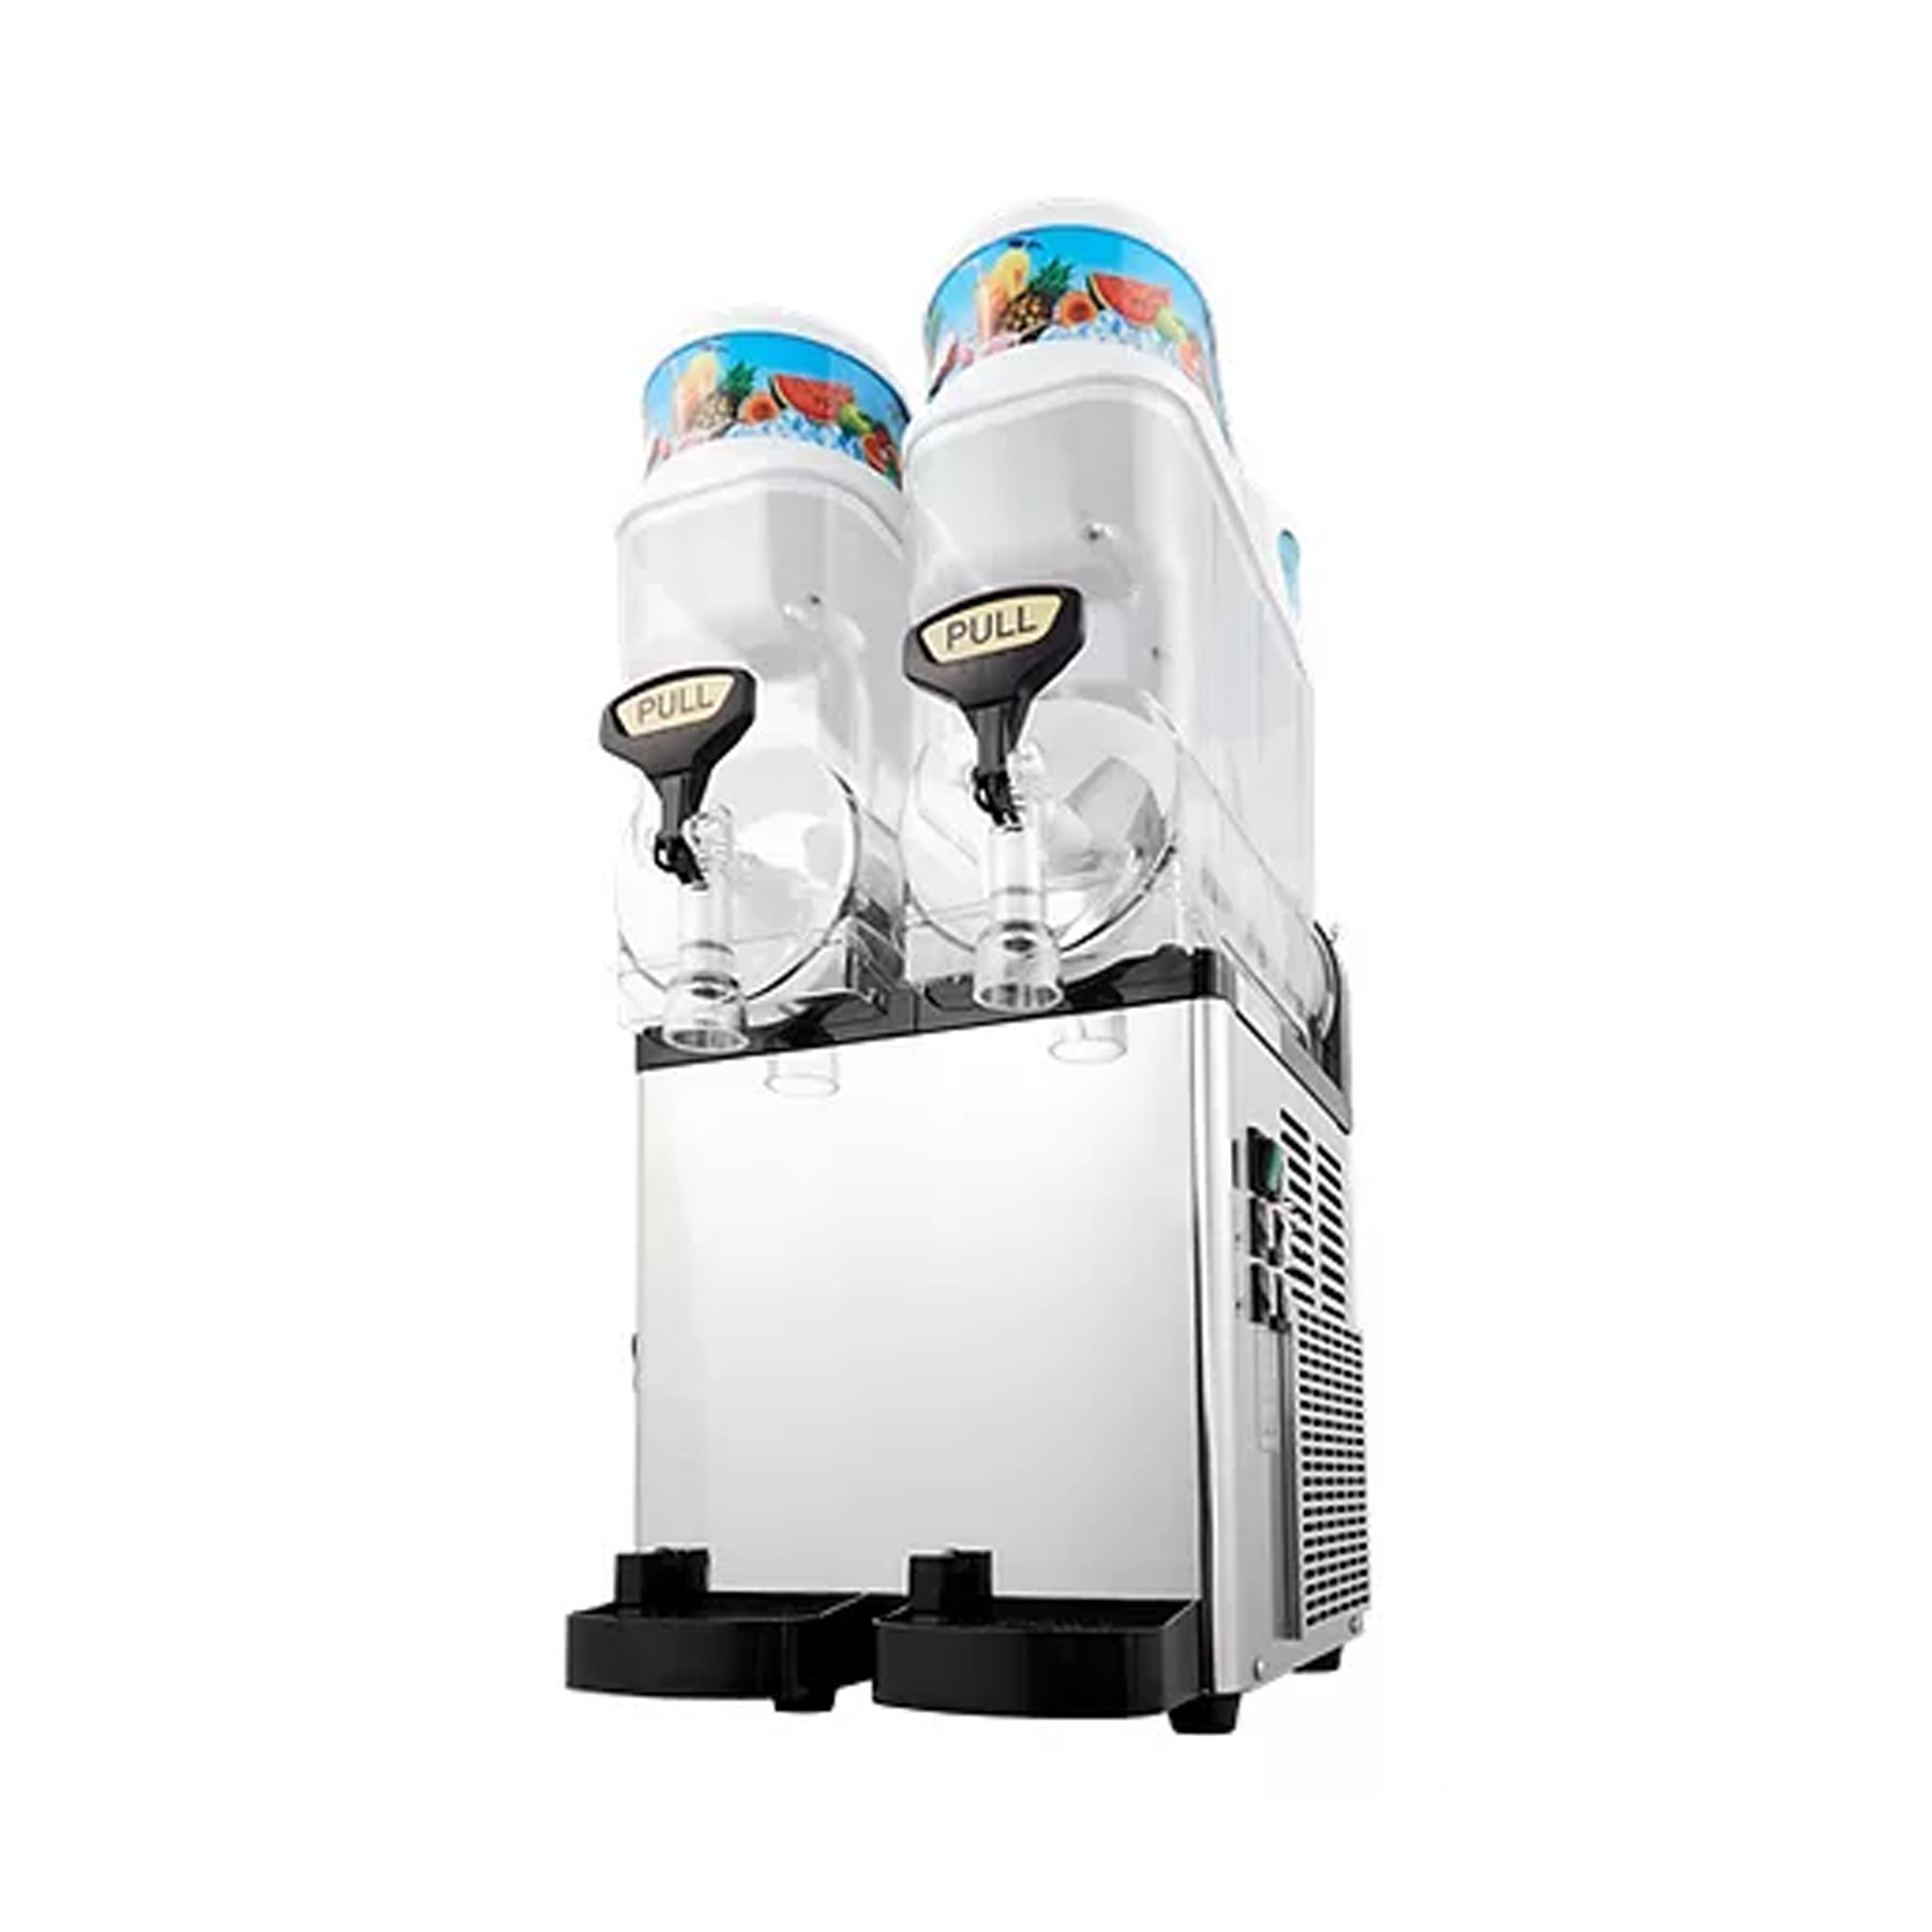 Icetro - SSM-280, Commercial Double 3.2 Gallon Granita Slushy Frozen Margarita Beverage Machine